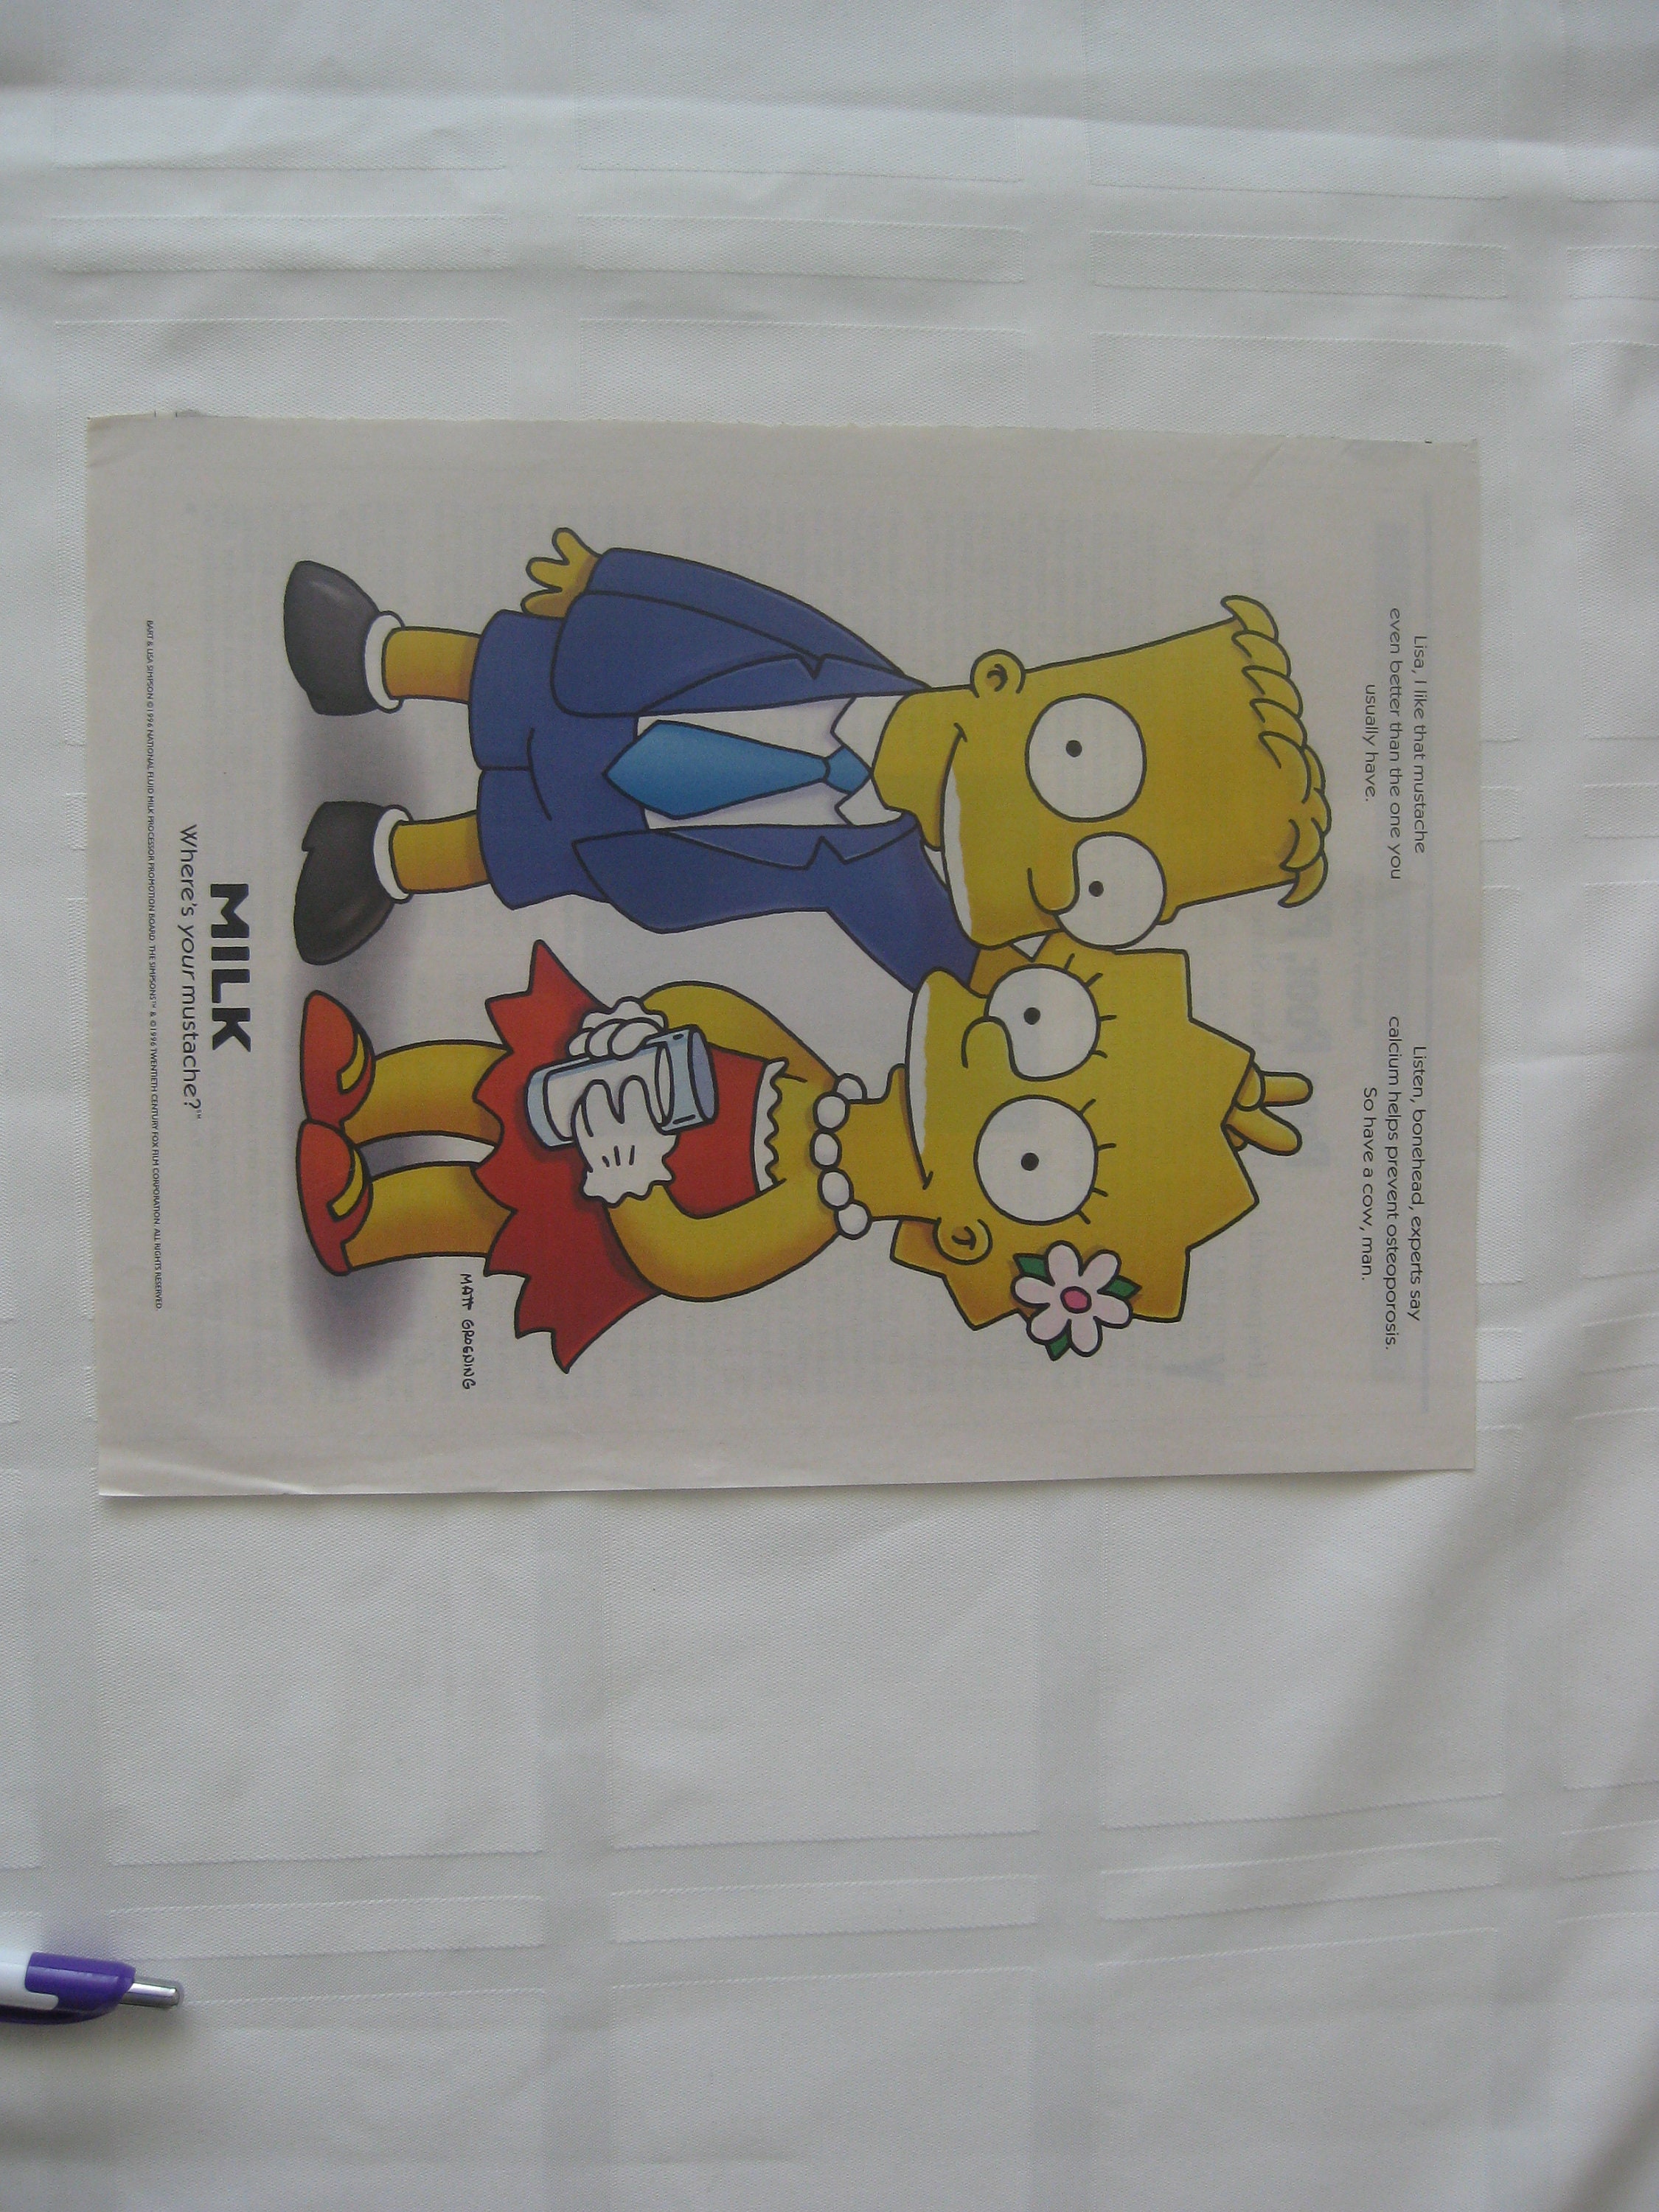 The Simpsons Family Retro Art Print 1987 Tracey Ullman Shorts